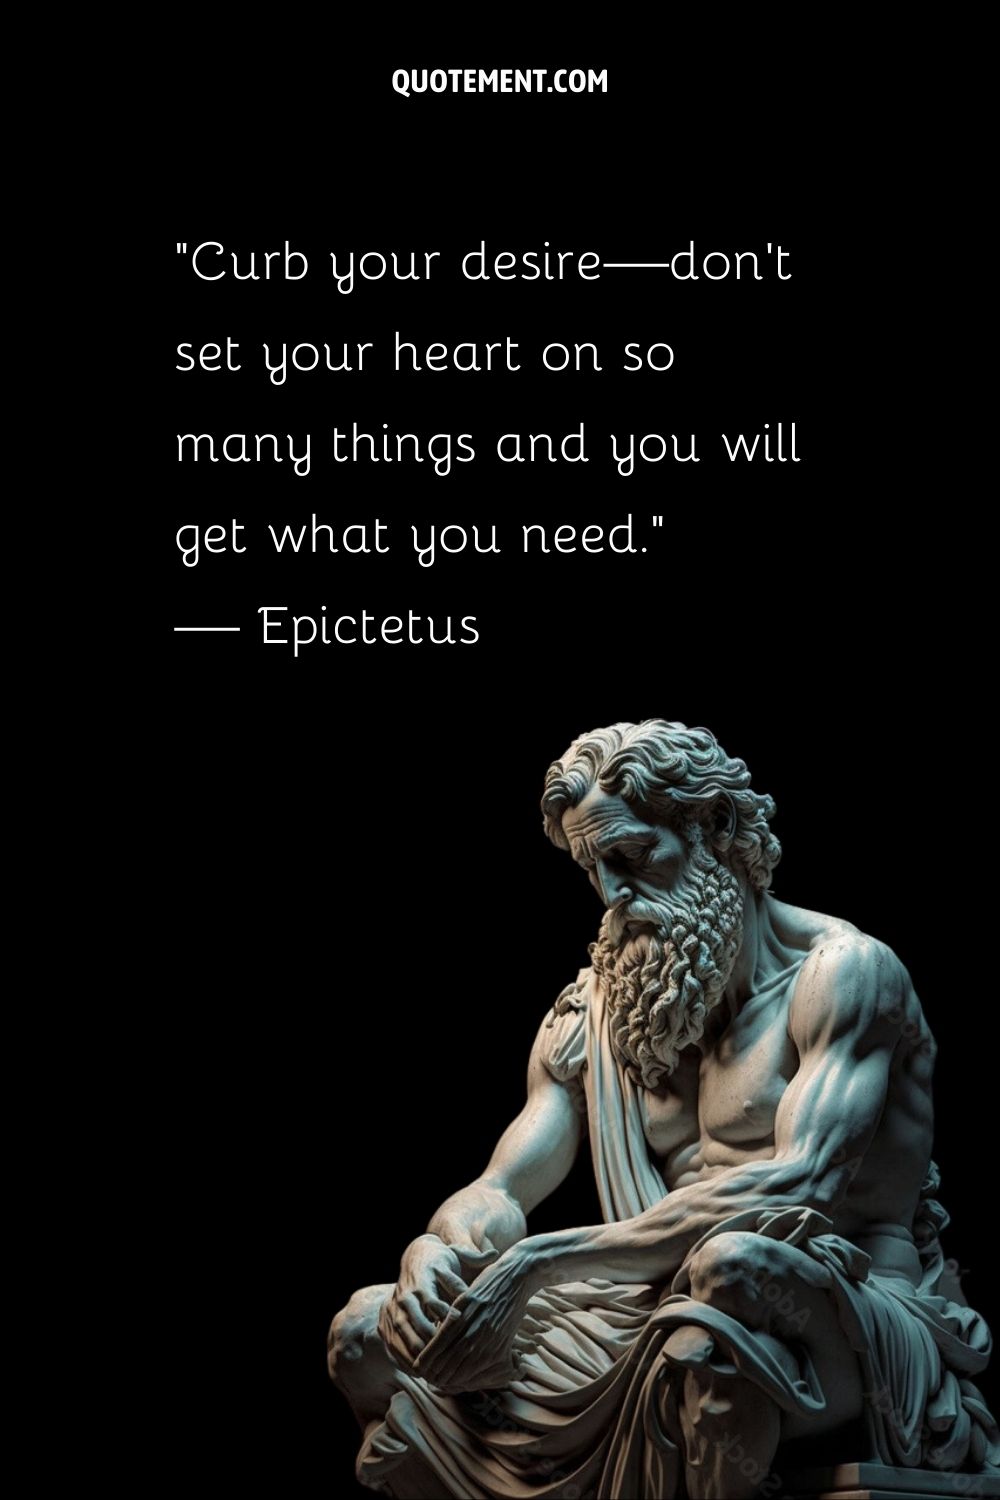 Epictetus' stoic teachings whisper through enduring marble.